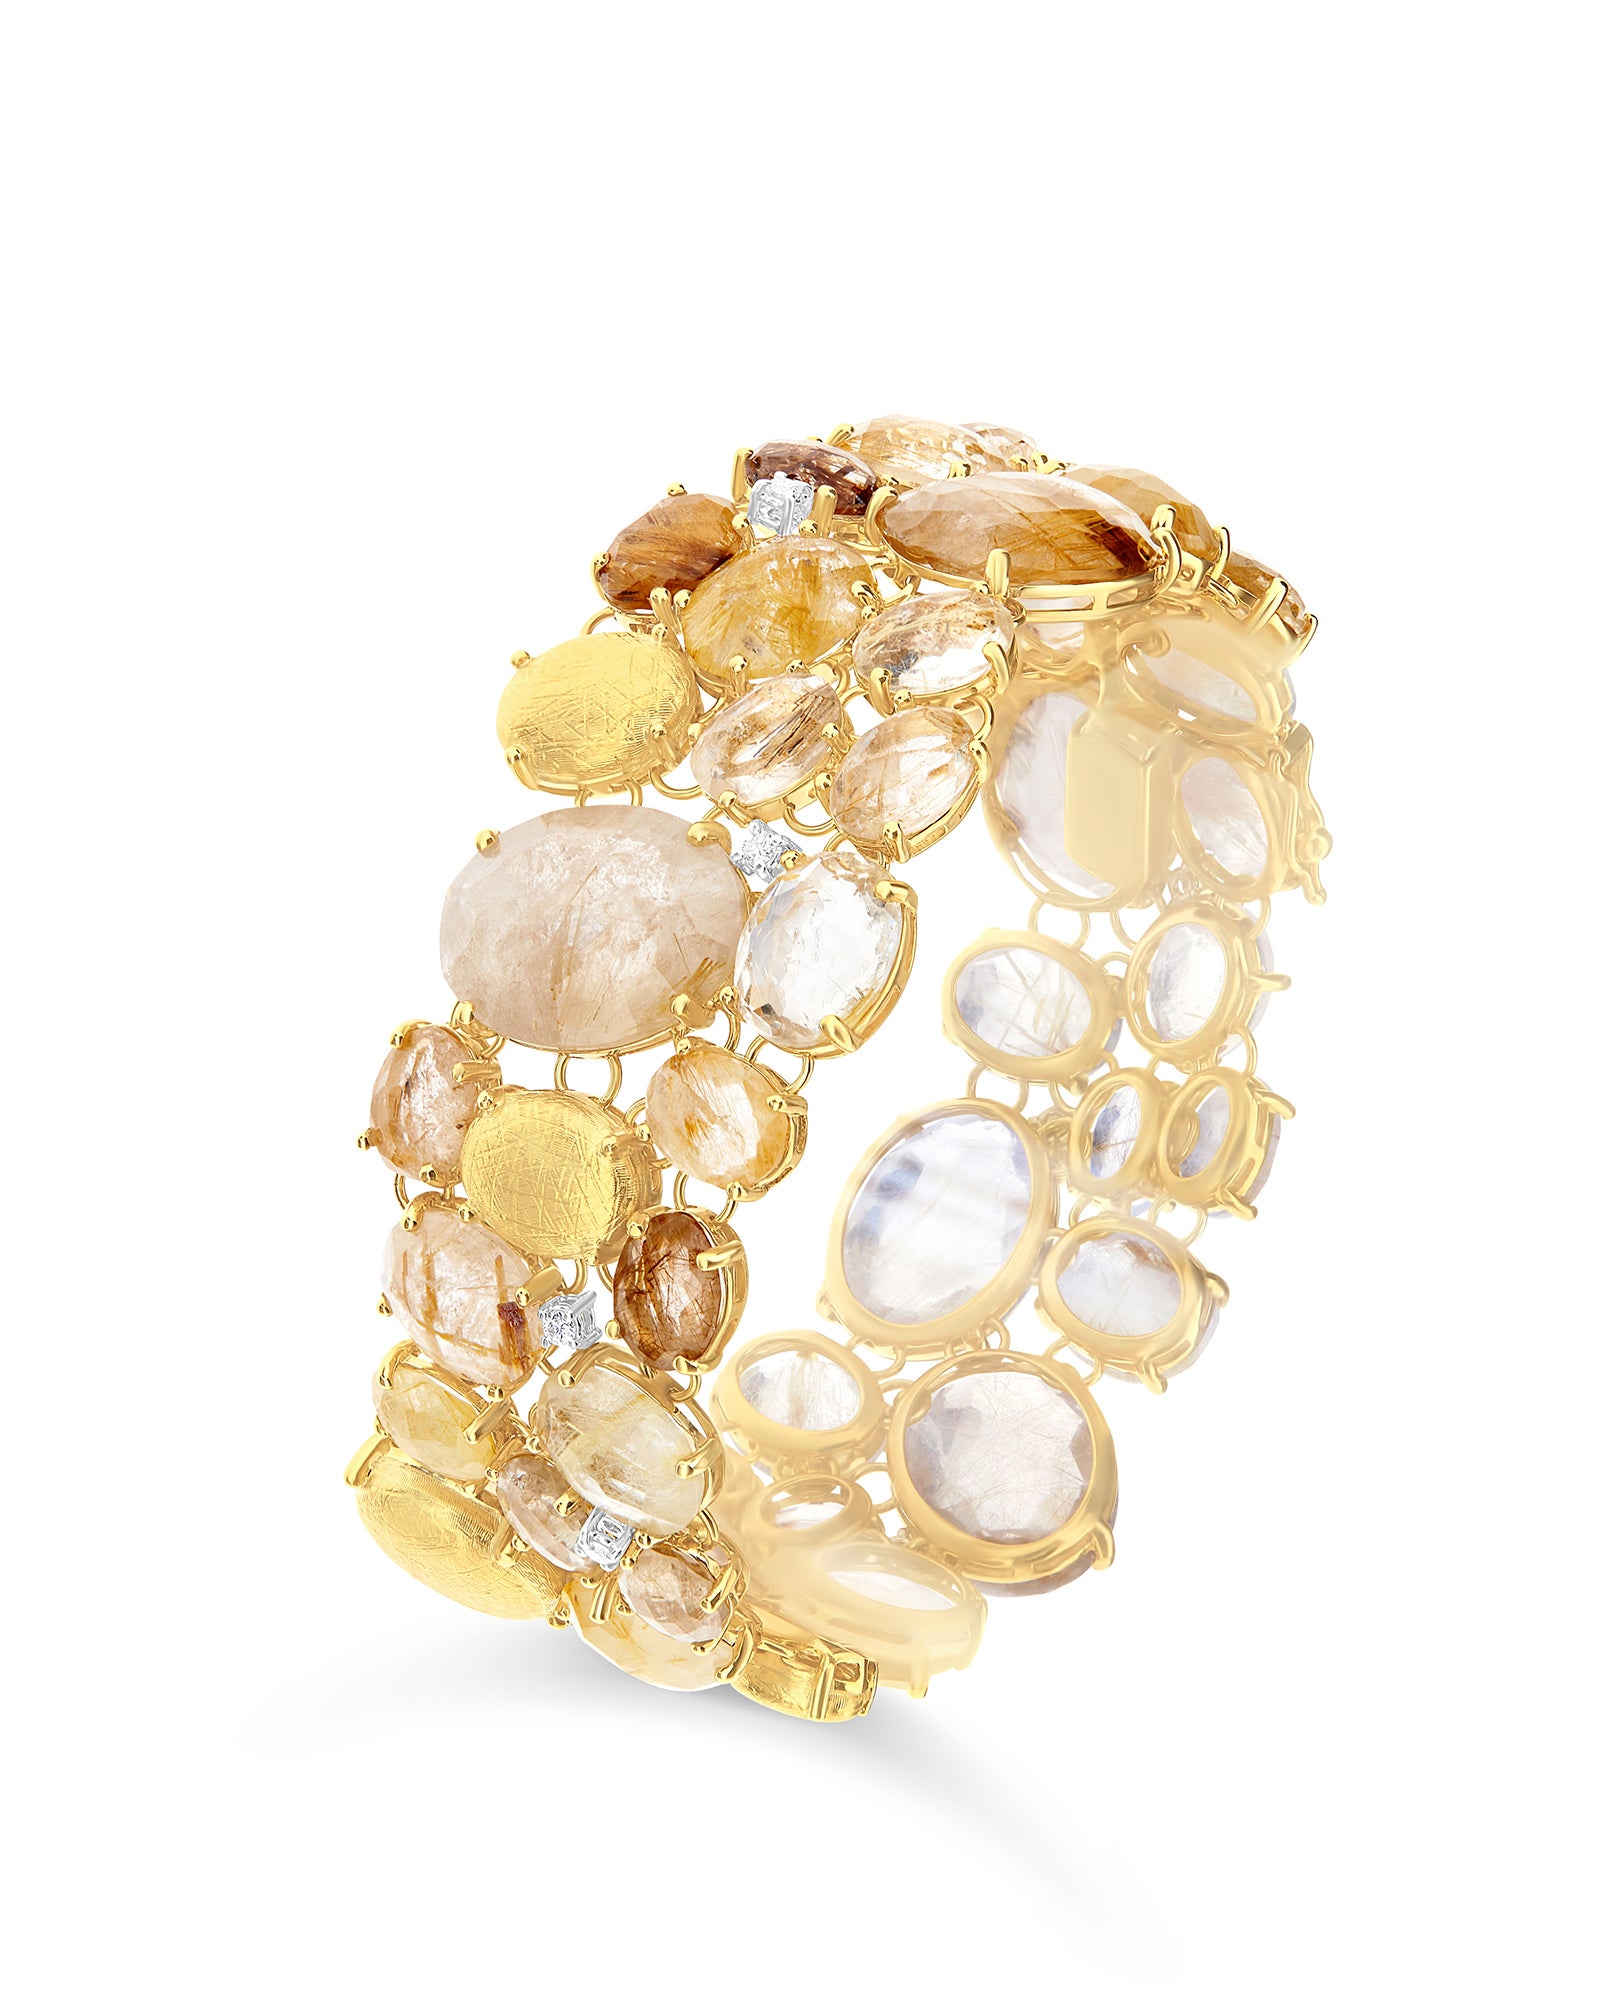 "Ipanema" Yellow rutilated quartz, diamonds and gold cuff bracelet